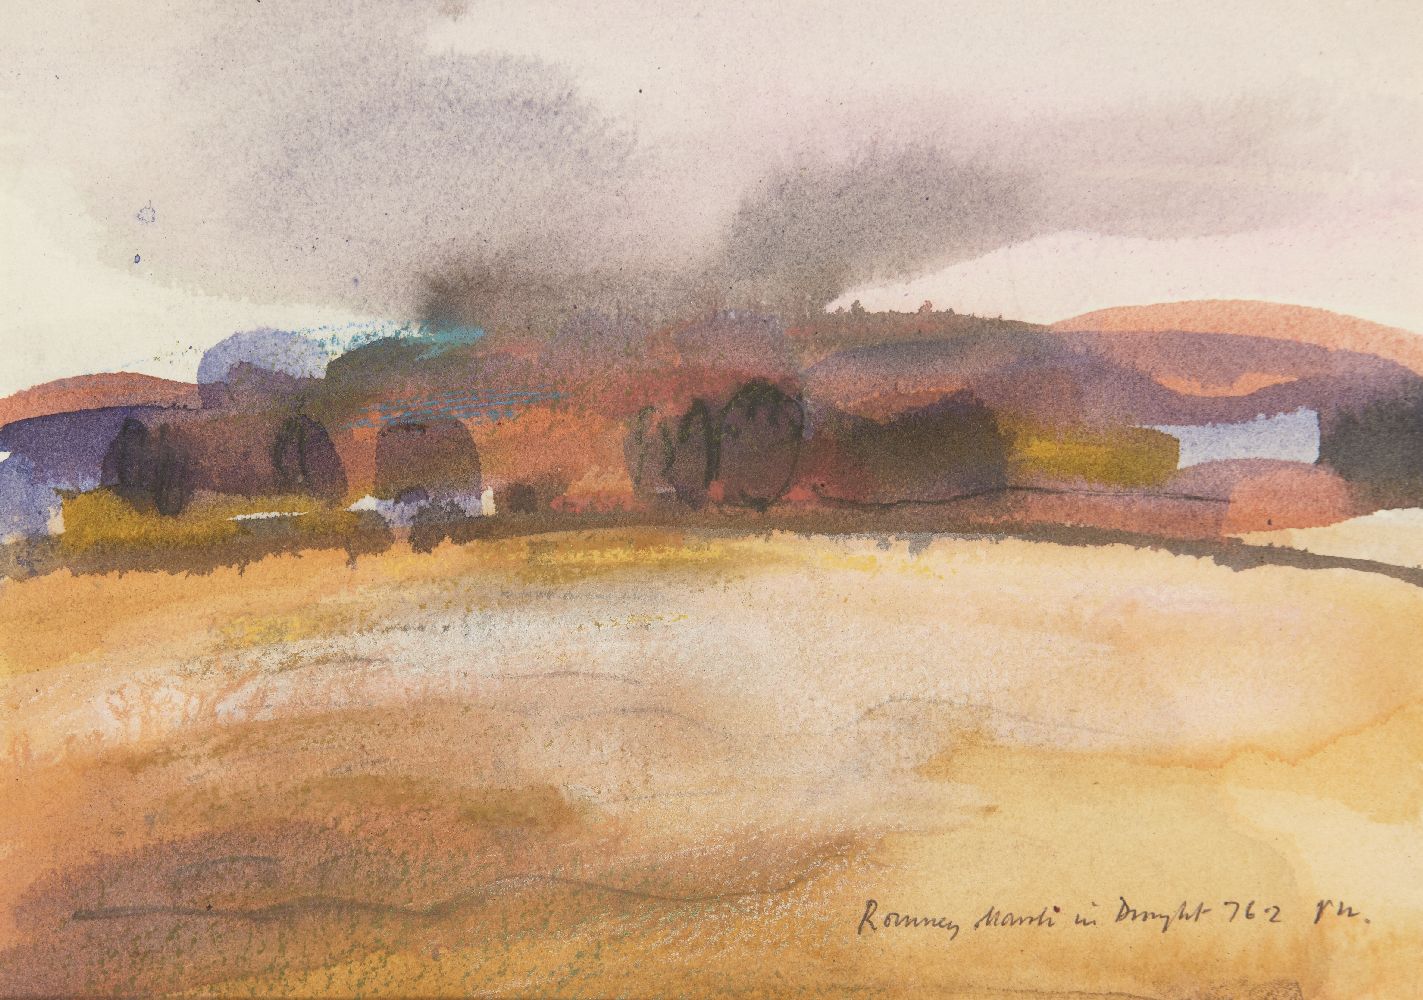 Roger Nicholson ARA, British 1922-1986- Rainham Marshes in Drought, 1976; watercolour, signed with